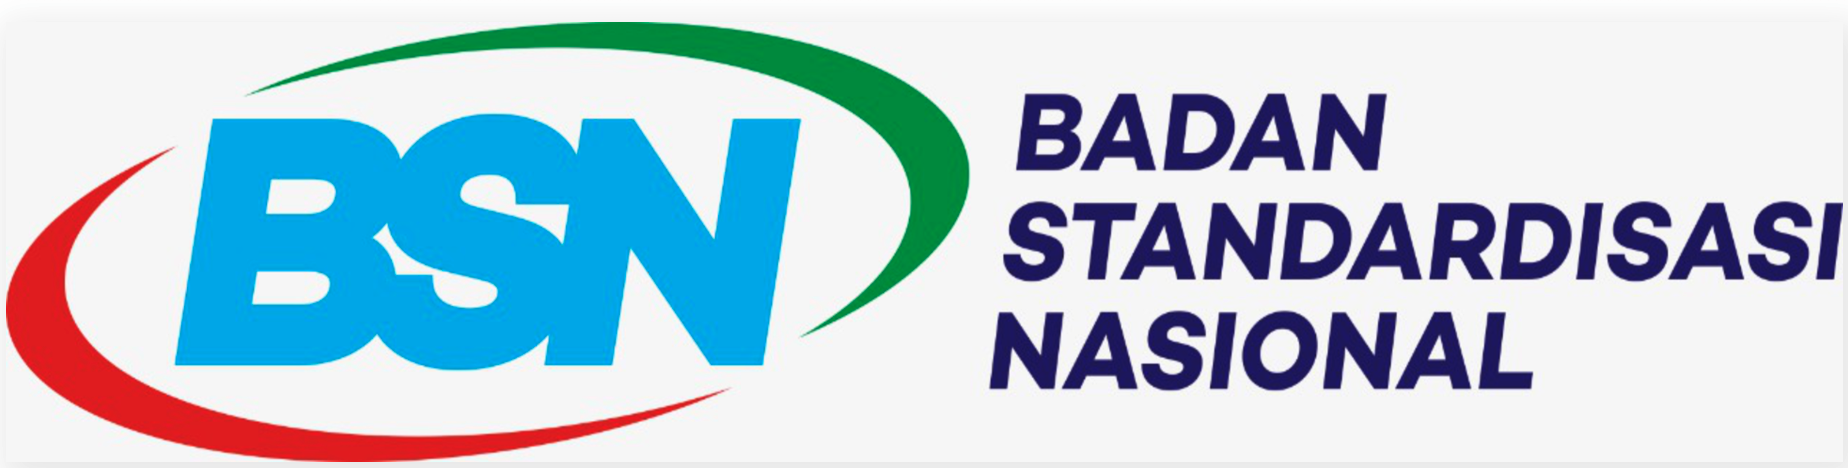 National Standardization Agency (BSN) logo